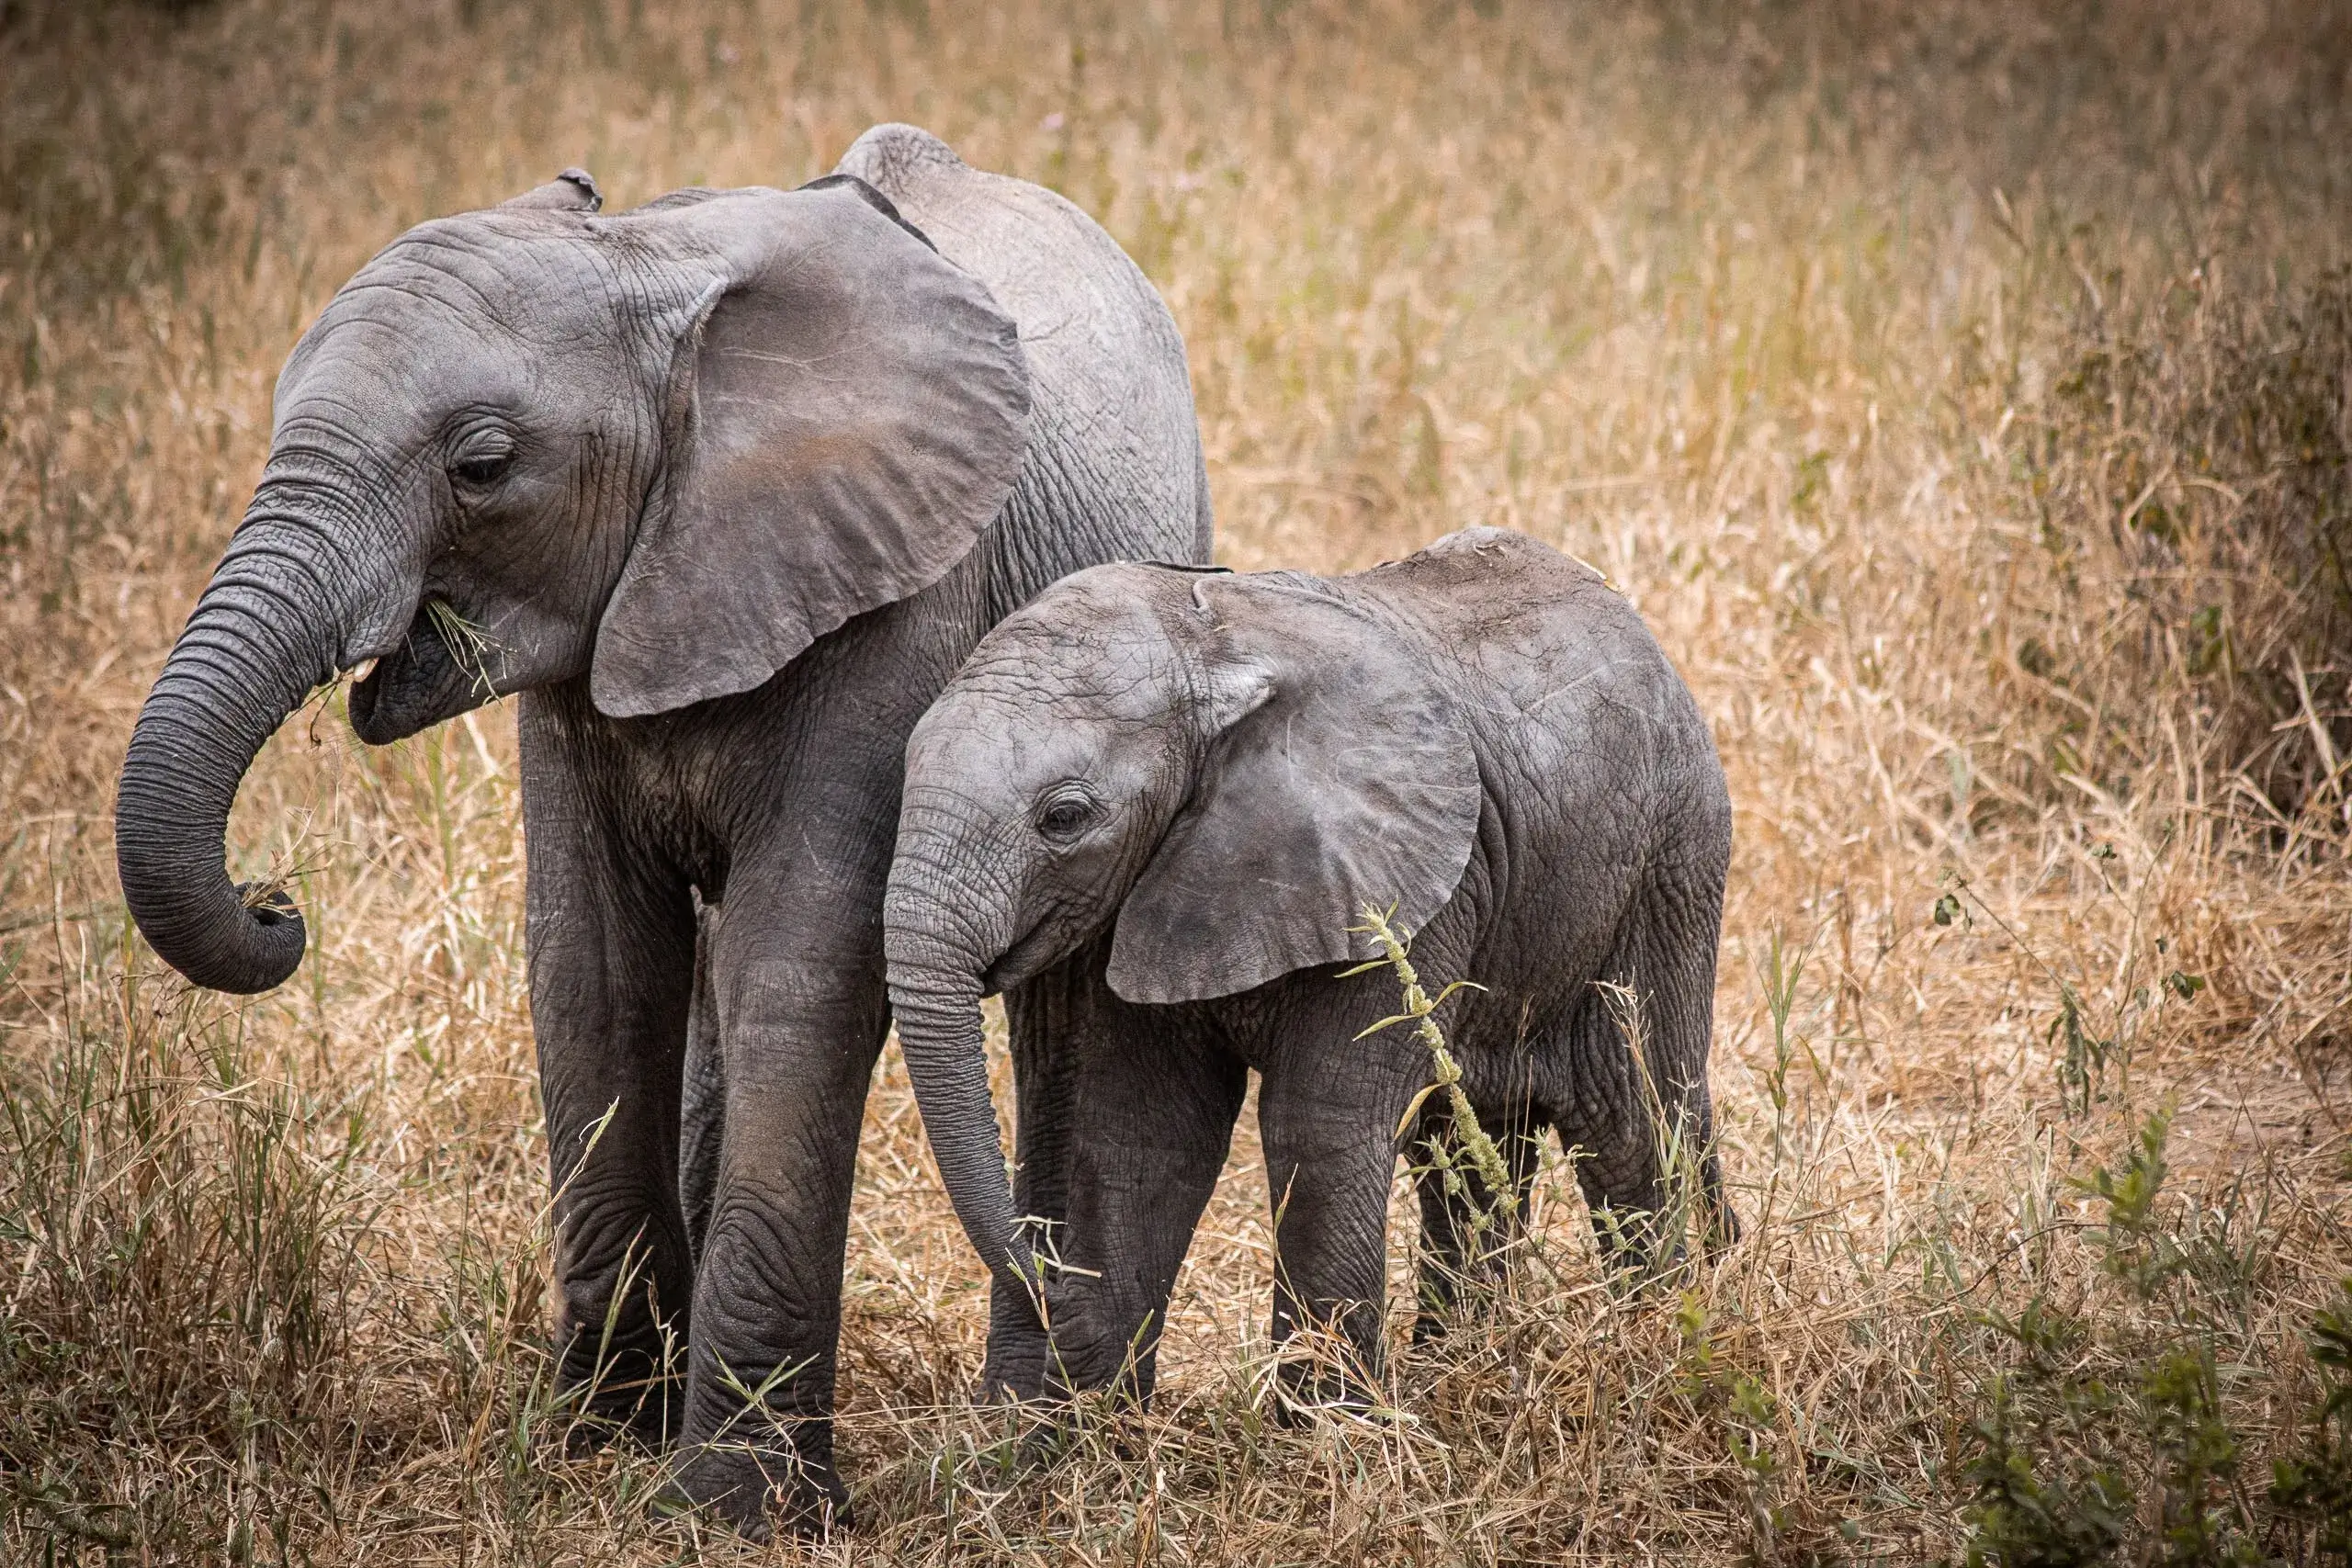 Baby elephants roaming spotted in Mt Kilimanjaro